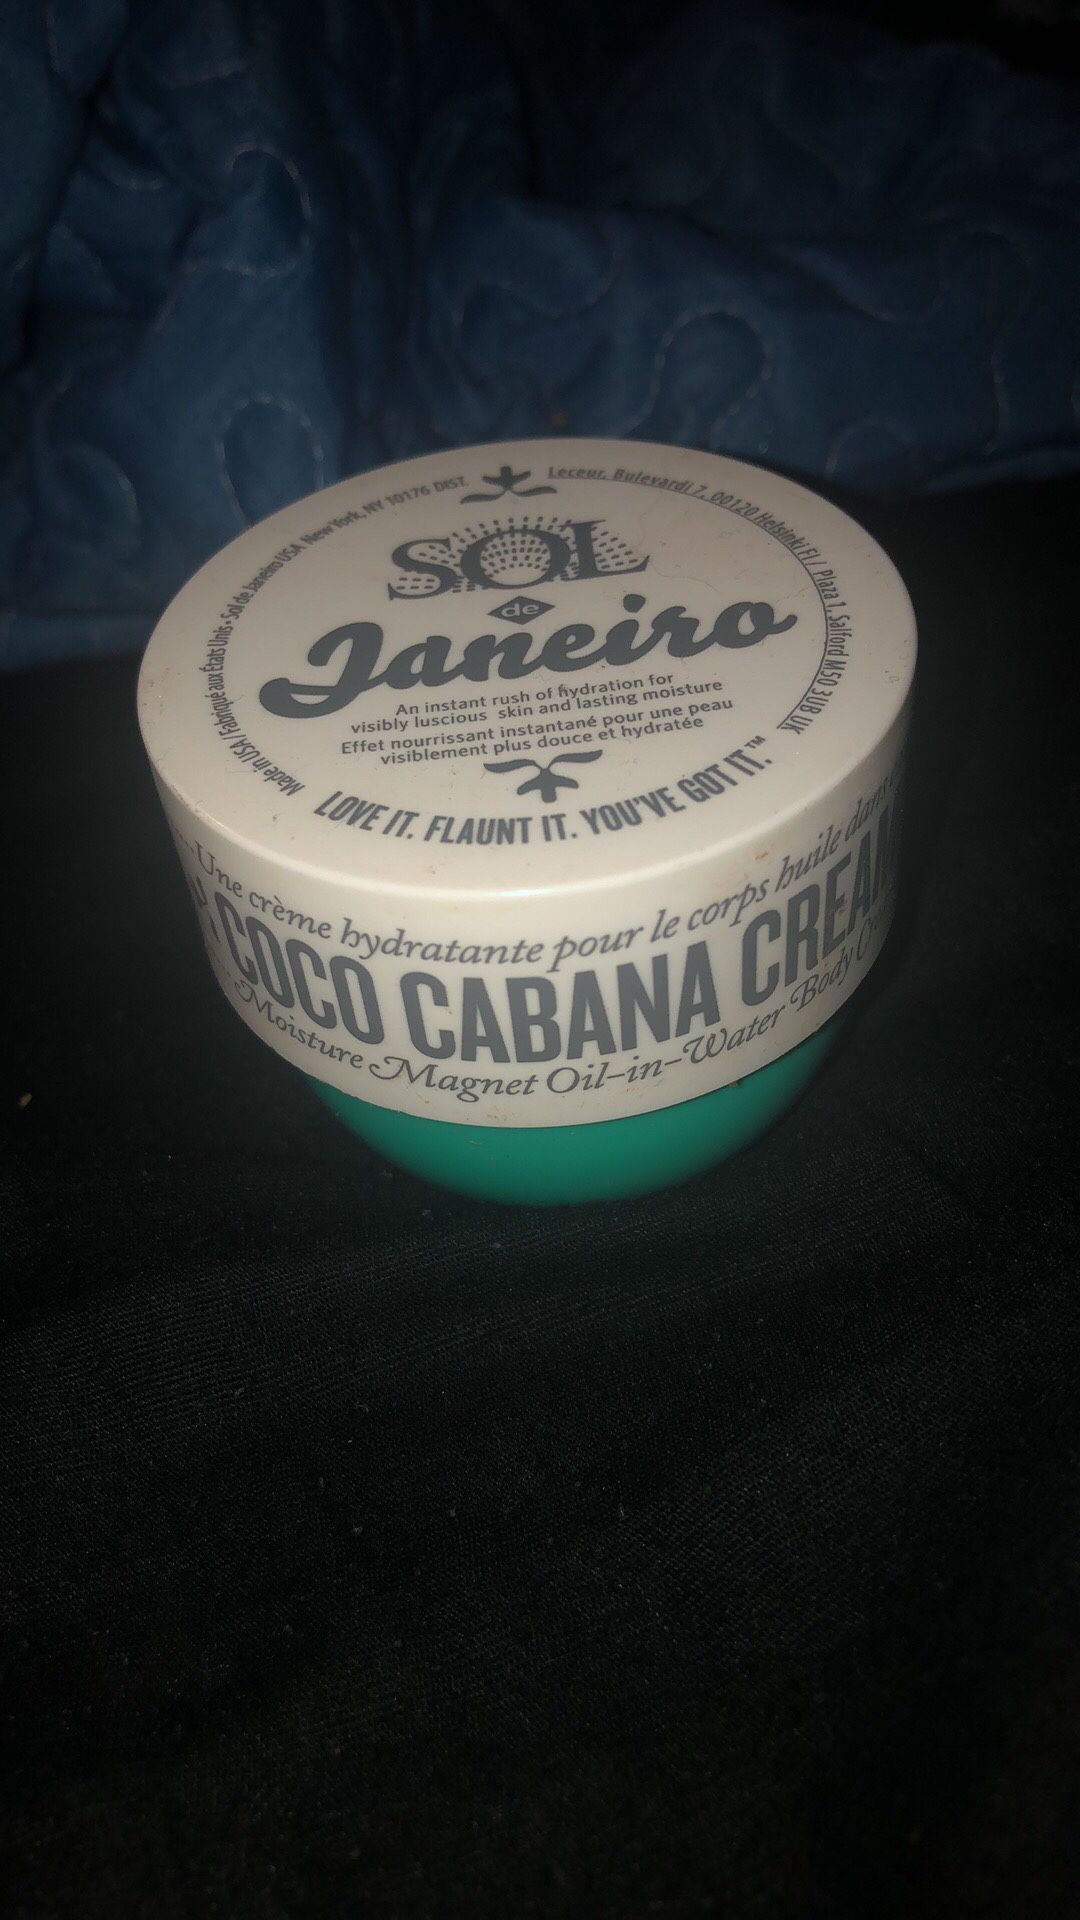 Coco cabana cream